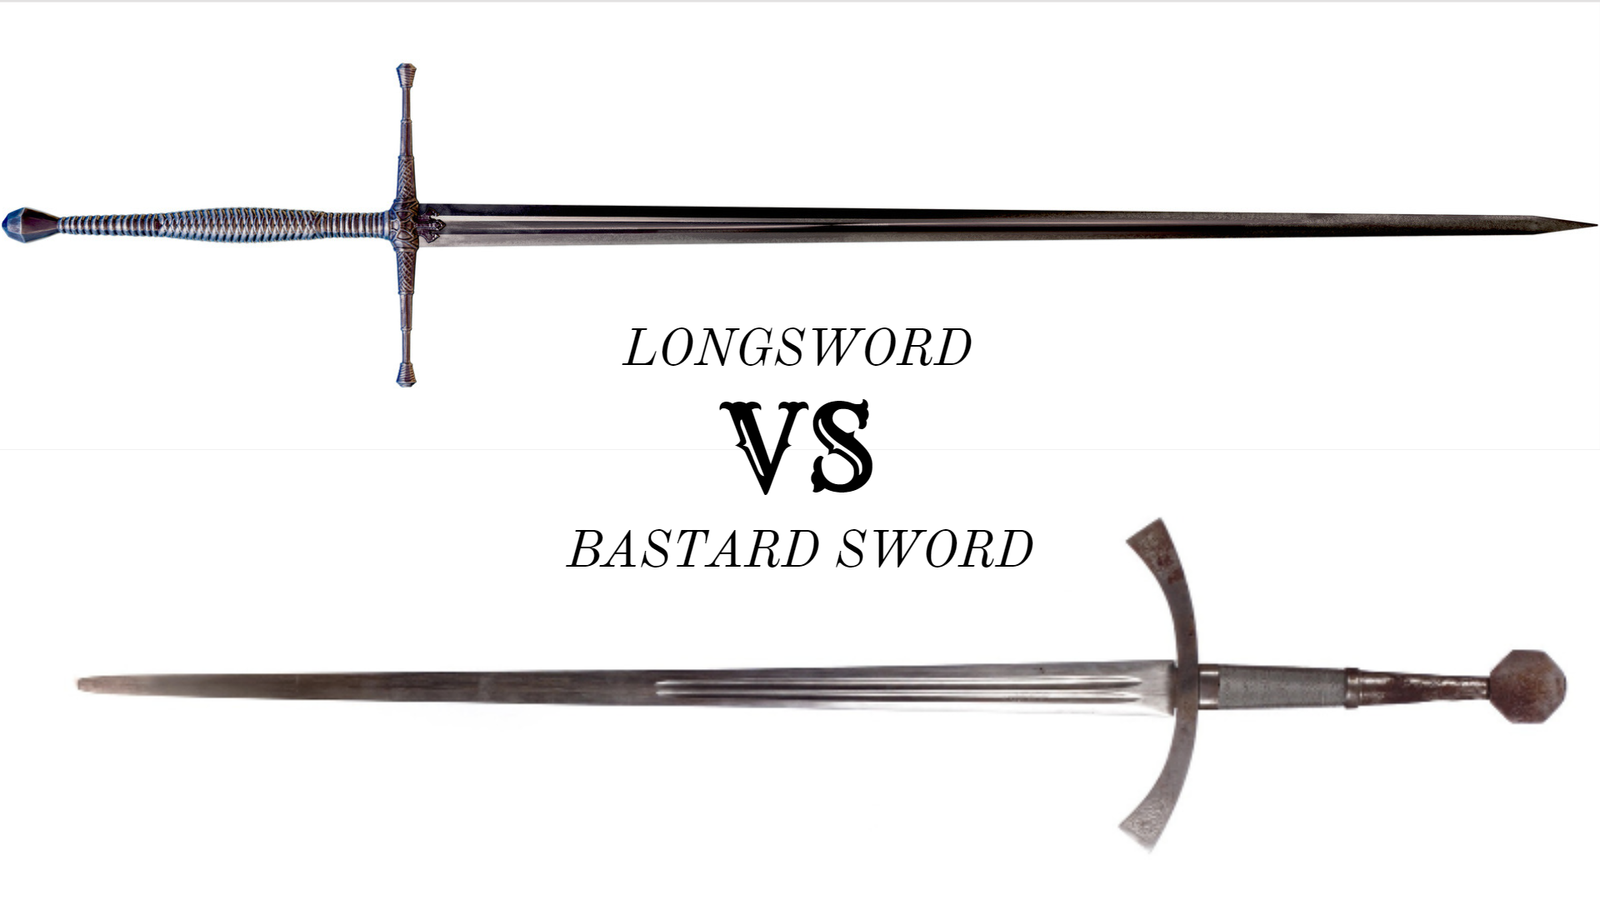 Bastard sword vs Longsword